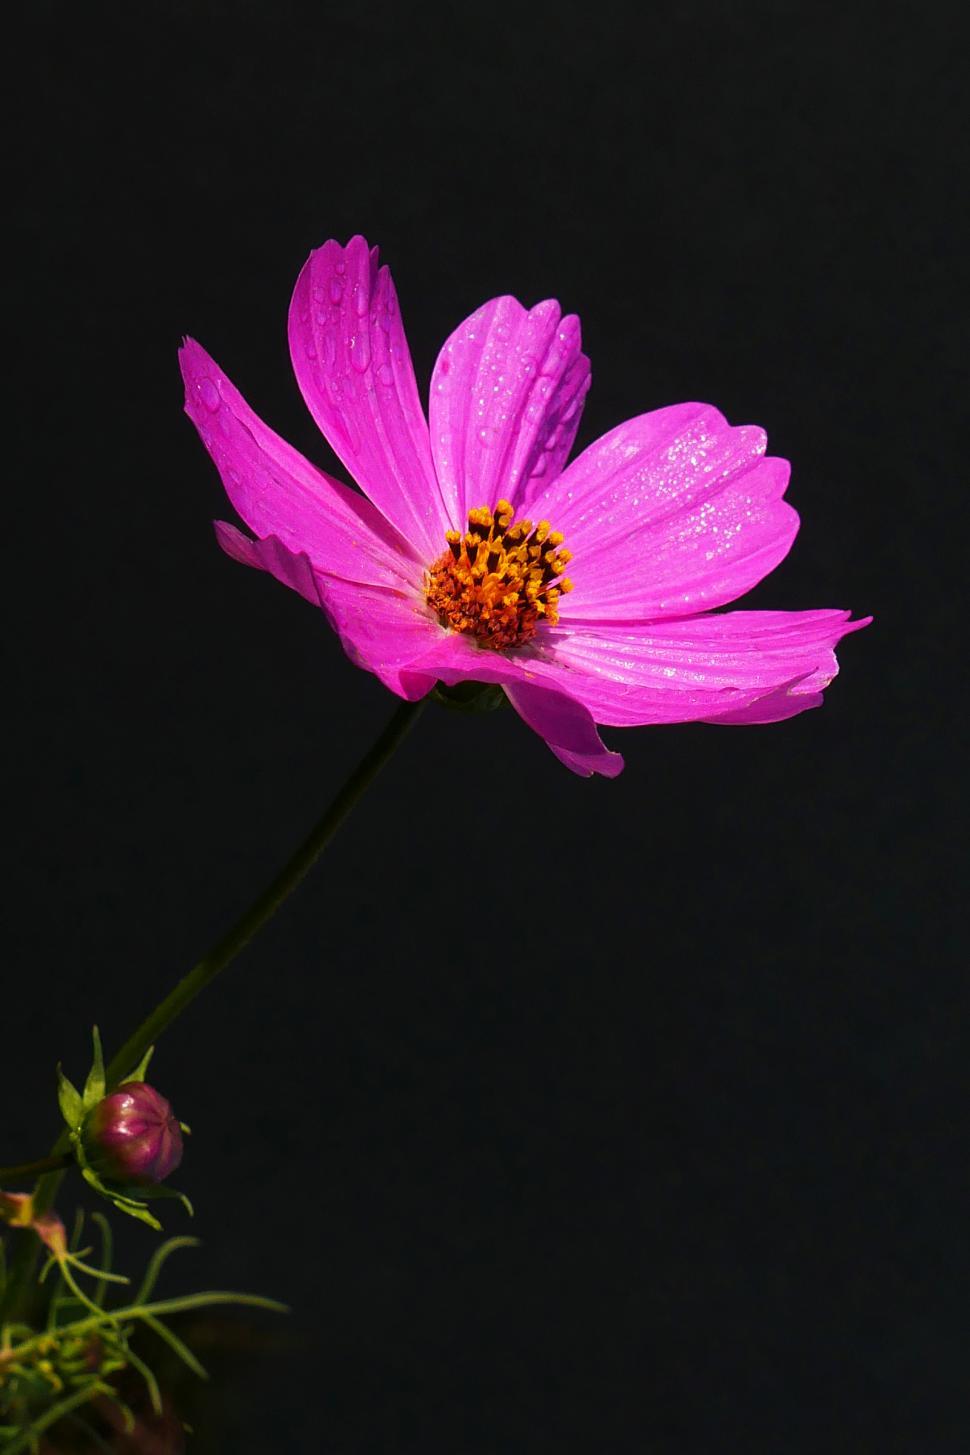 Free Image of Cosmos Flower on Dark Background 